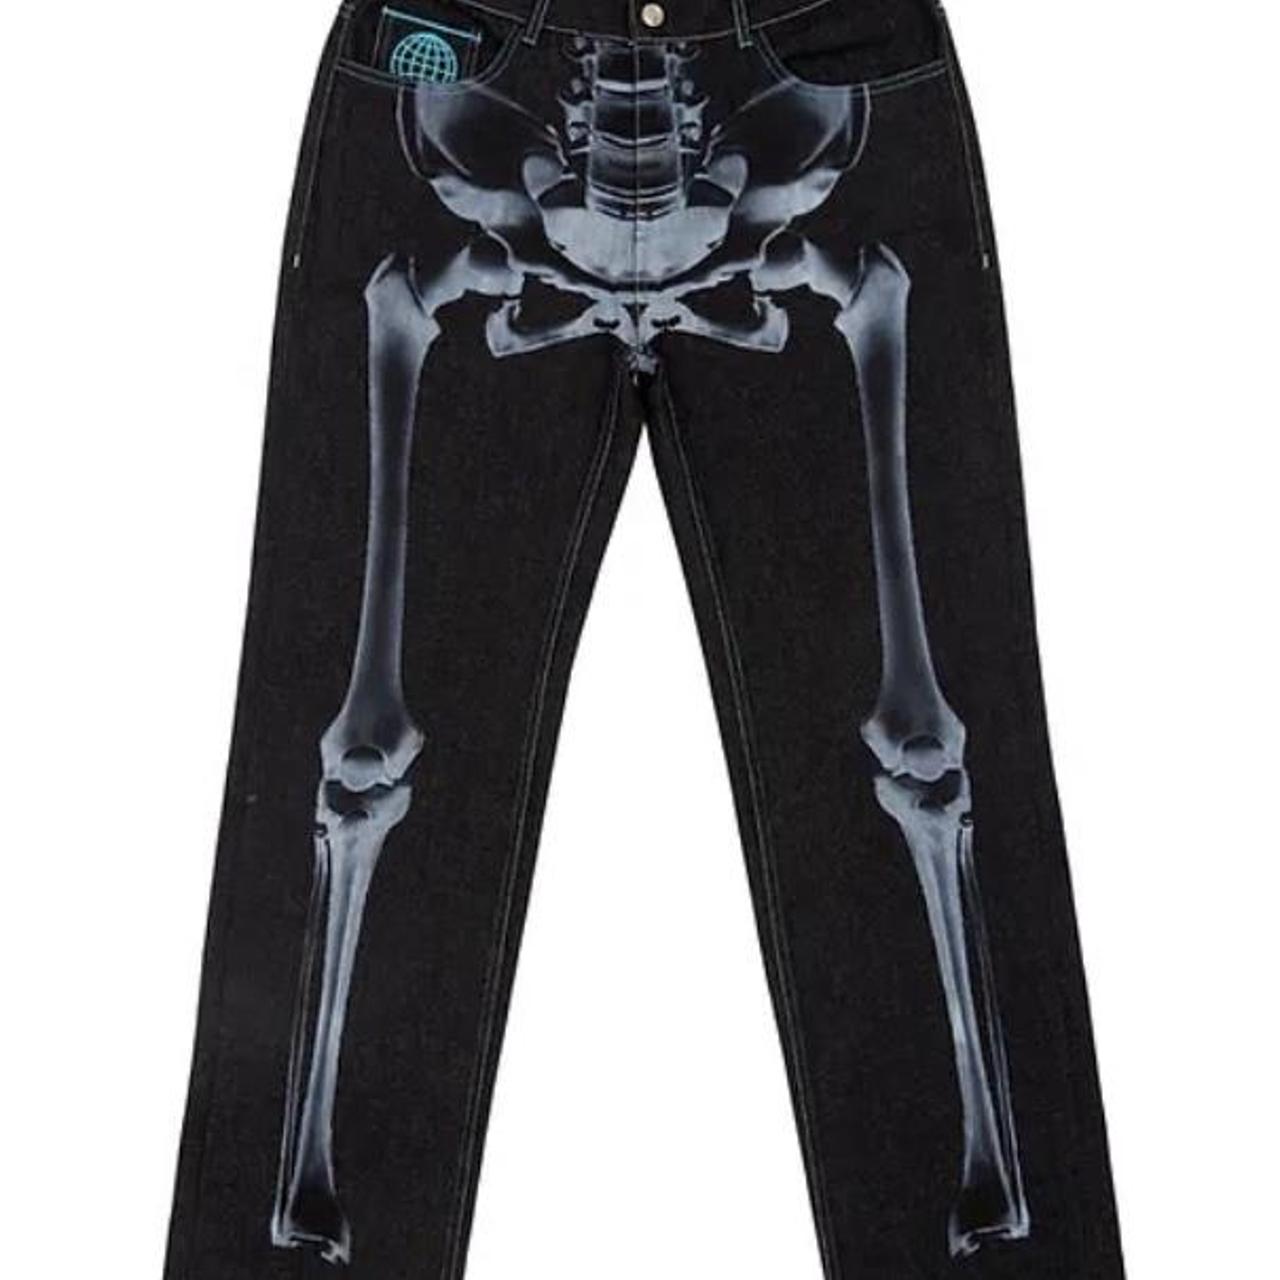 Minus Two skeleton Jeans - Depop